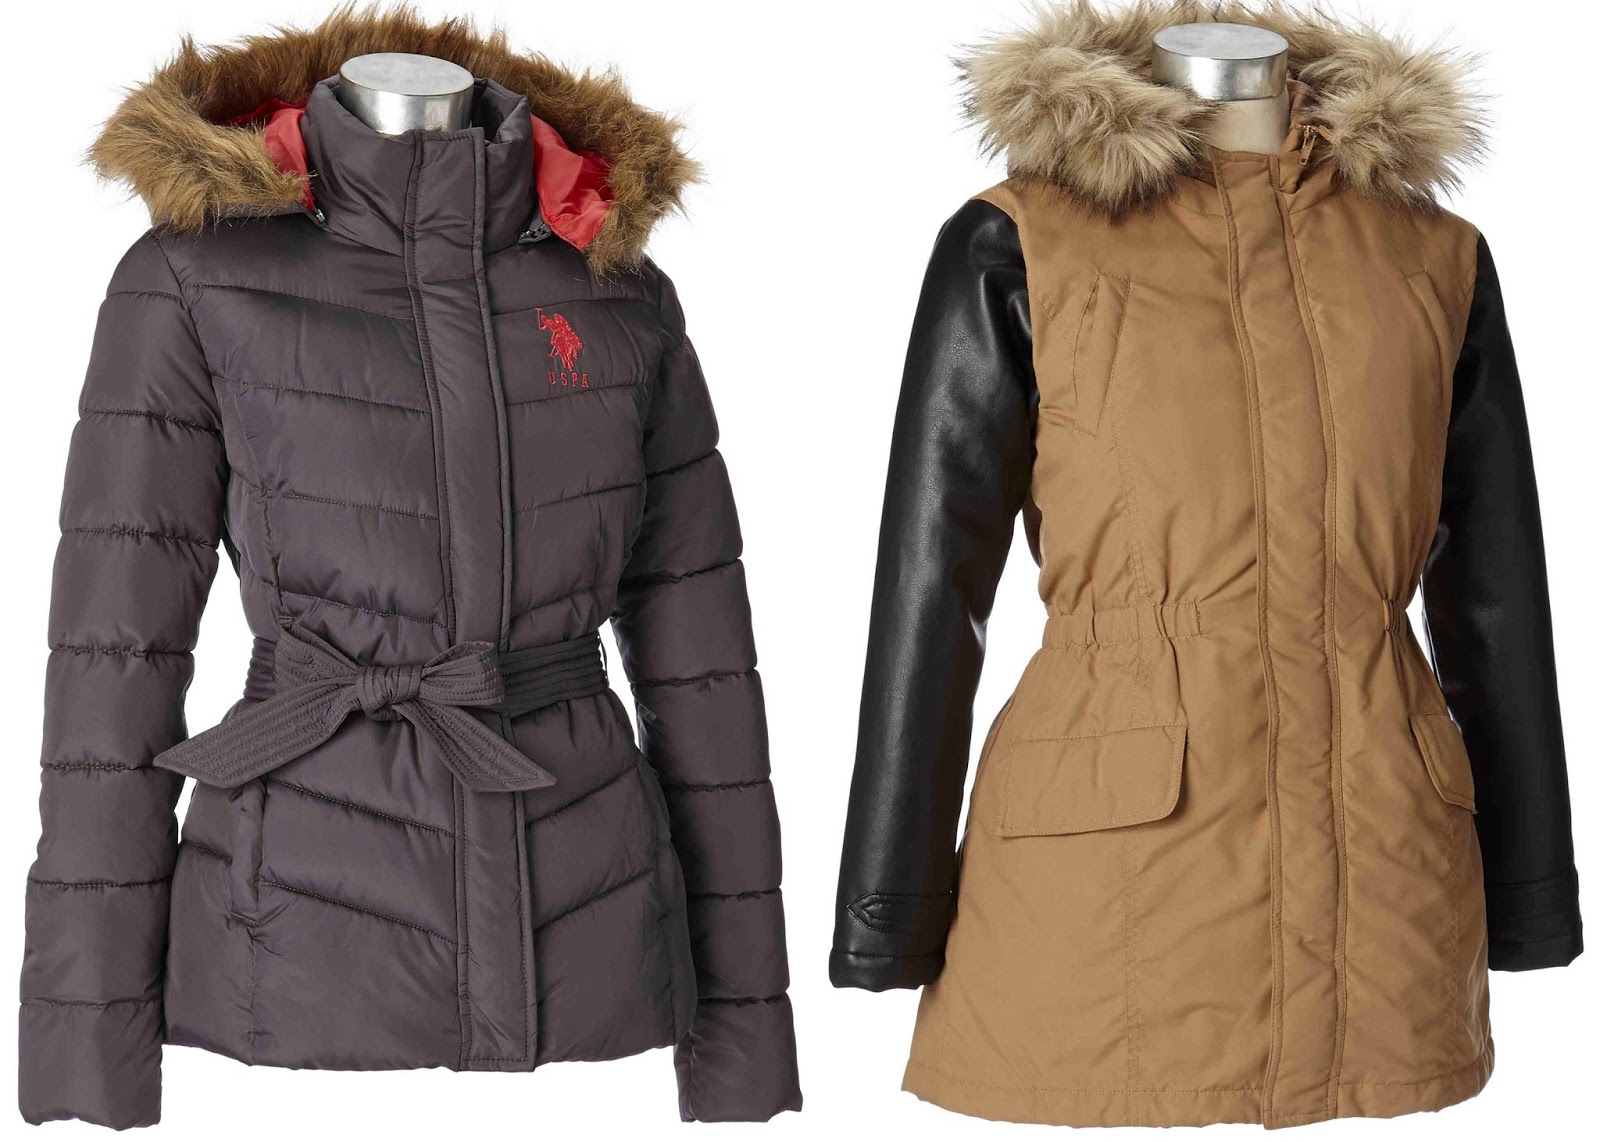 Burlington Coat Factory Winter Jackets Coats Prices